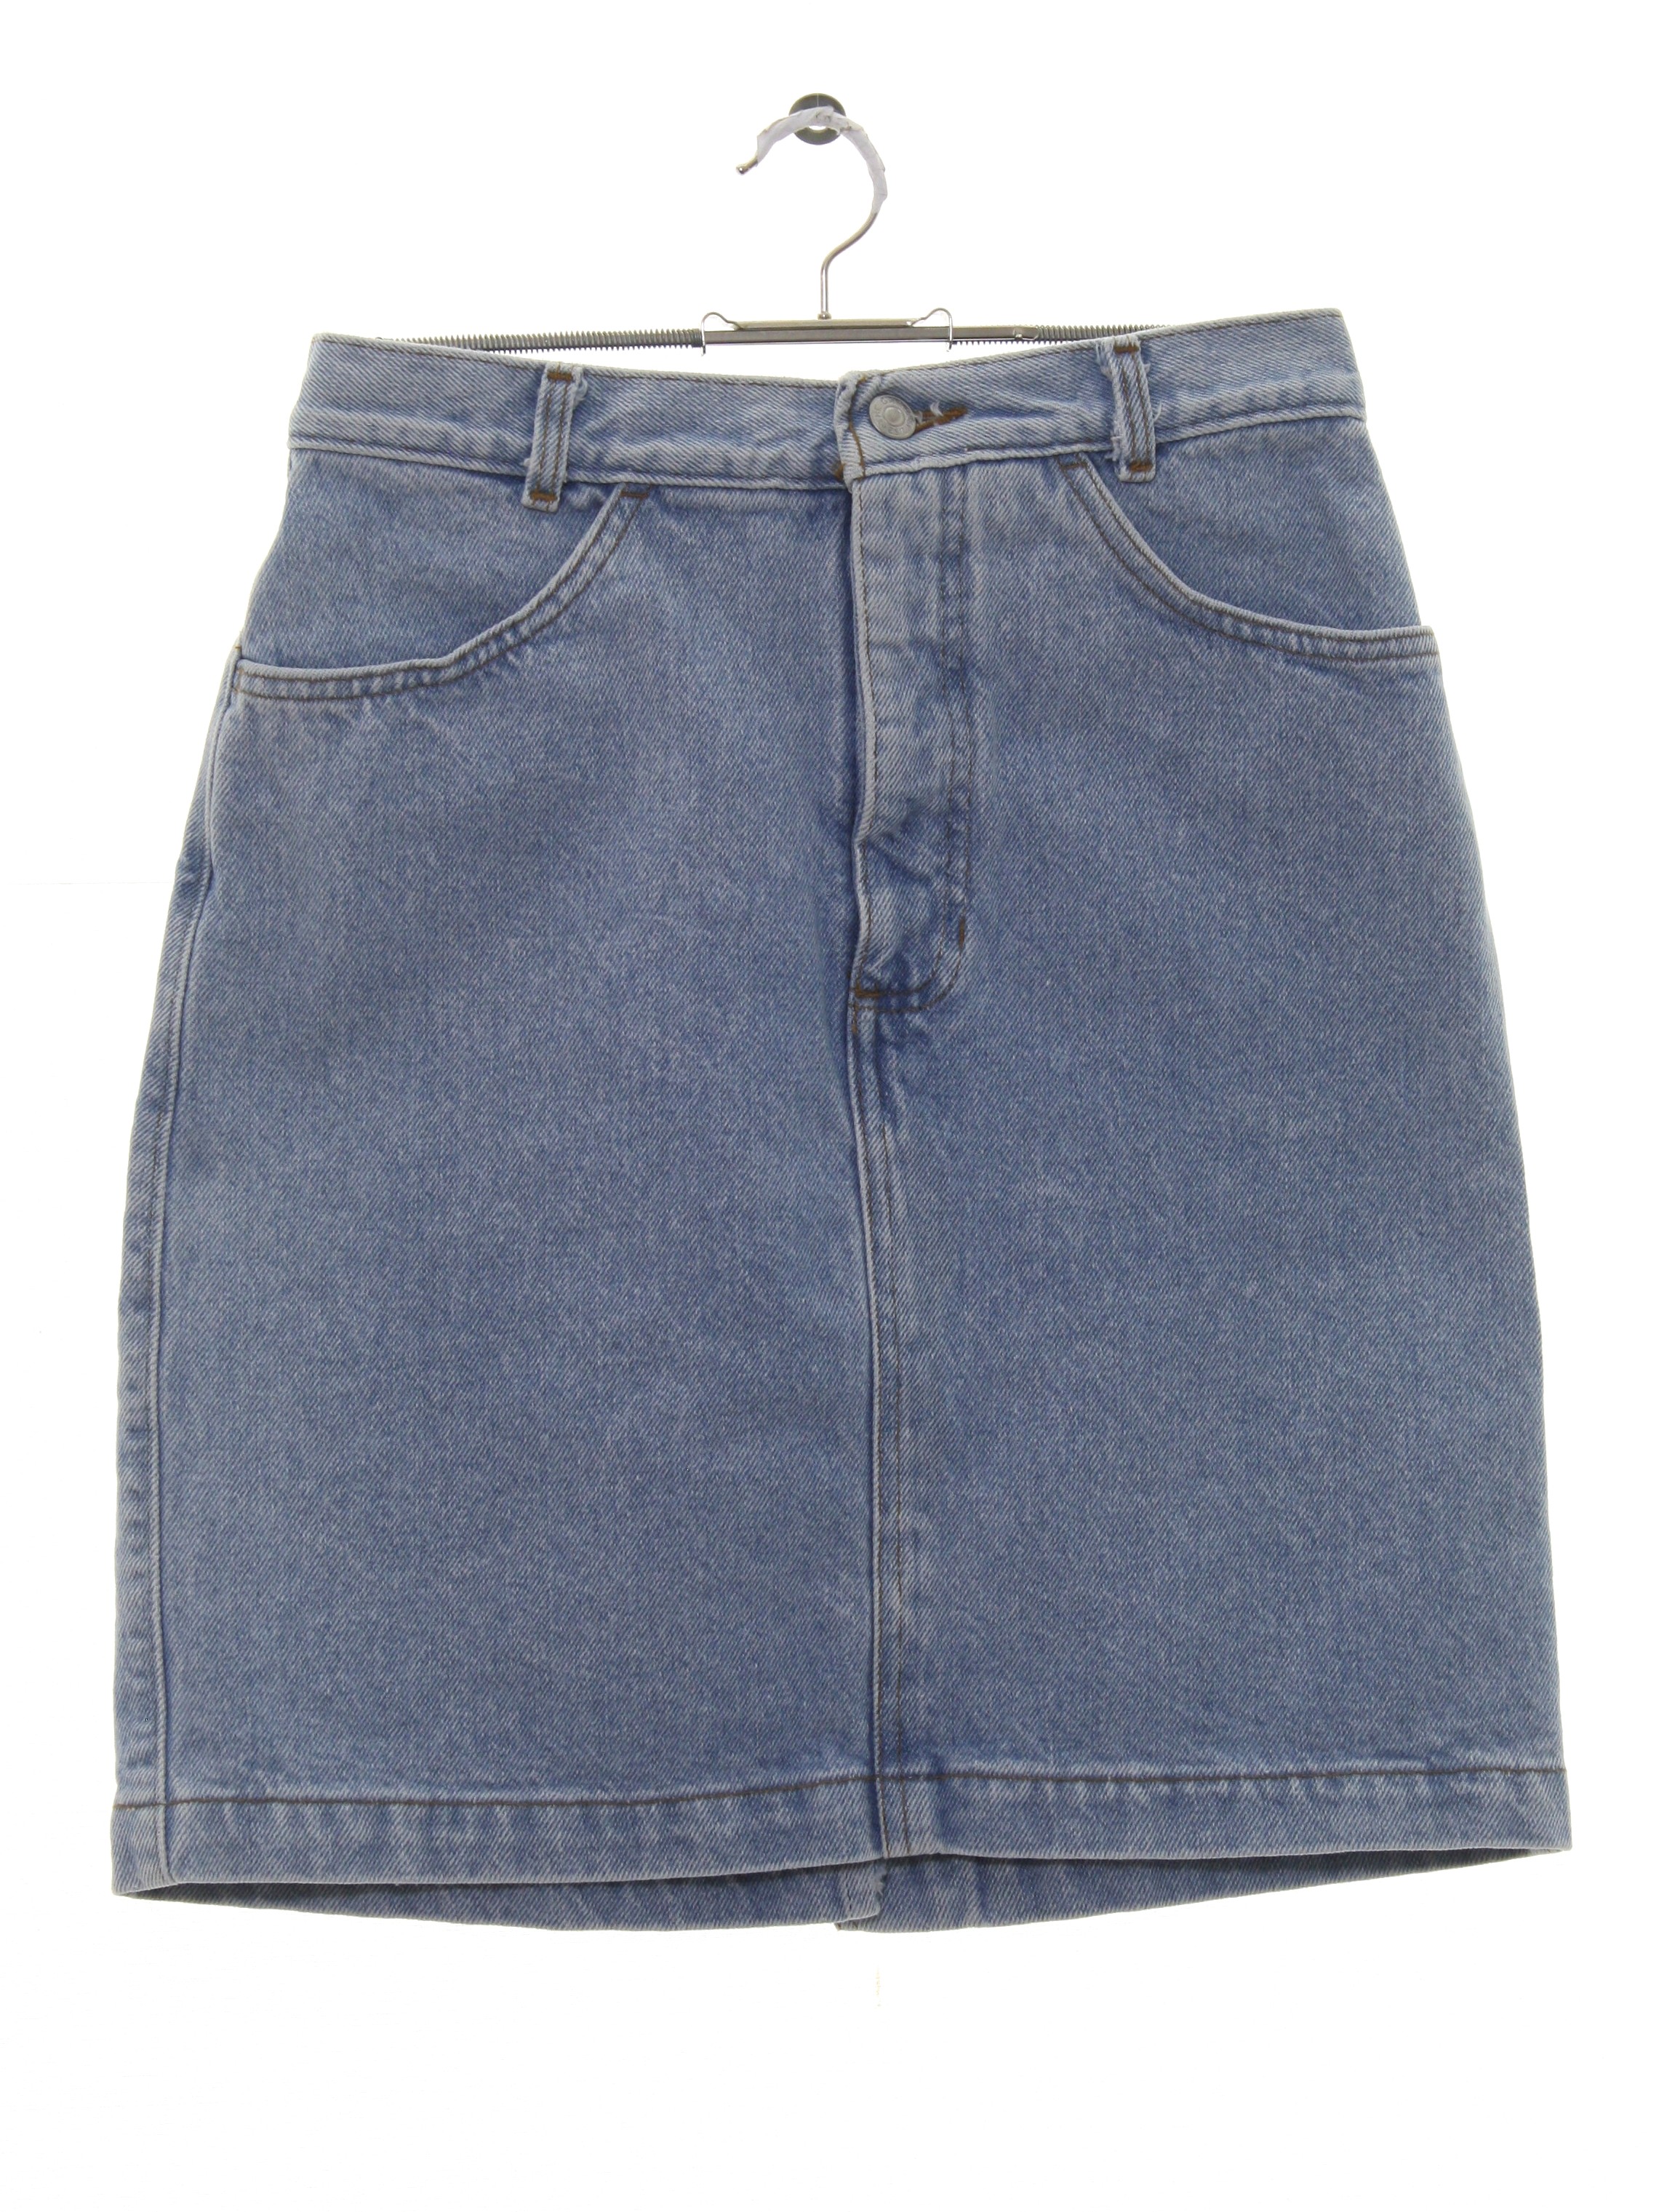 90s Retro Skirt: 90s -Gap- Womens light blue background cotton denim ...